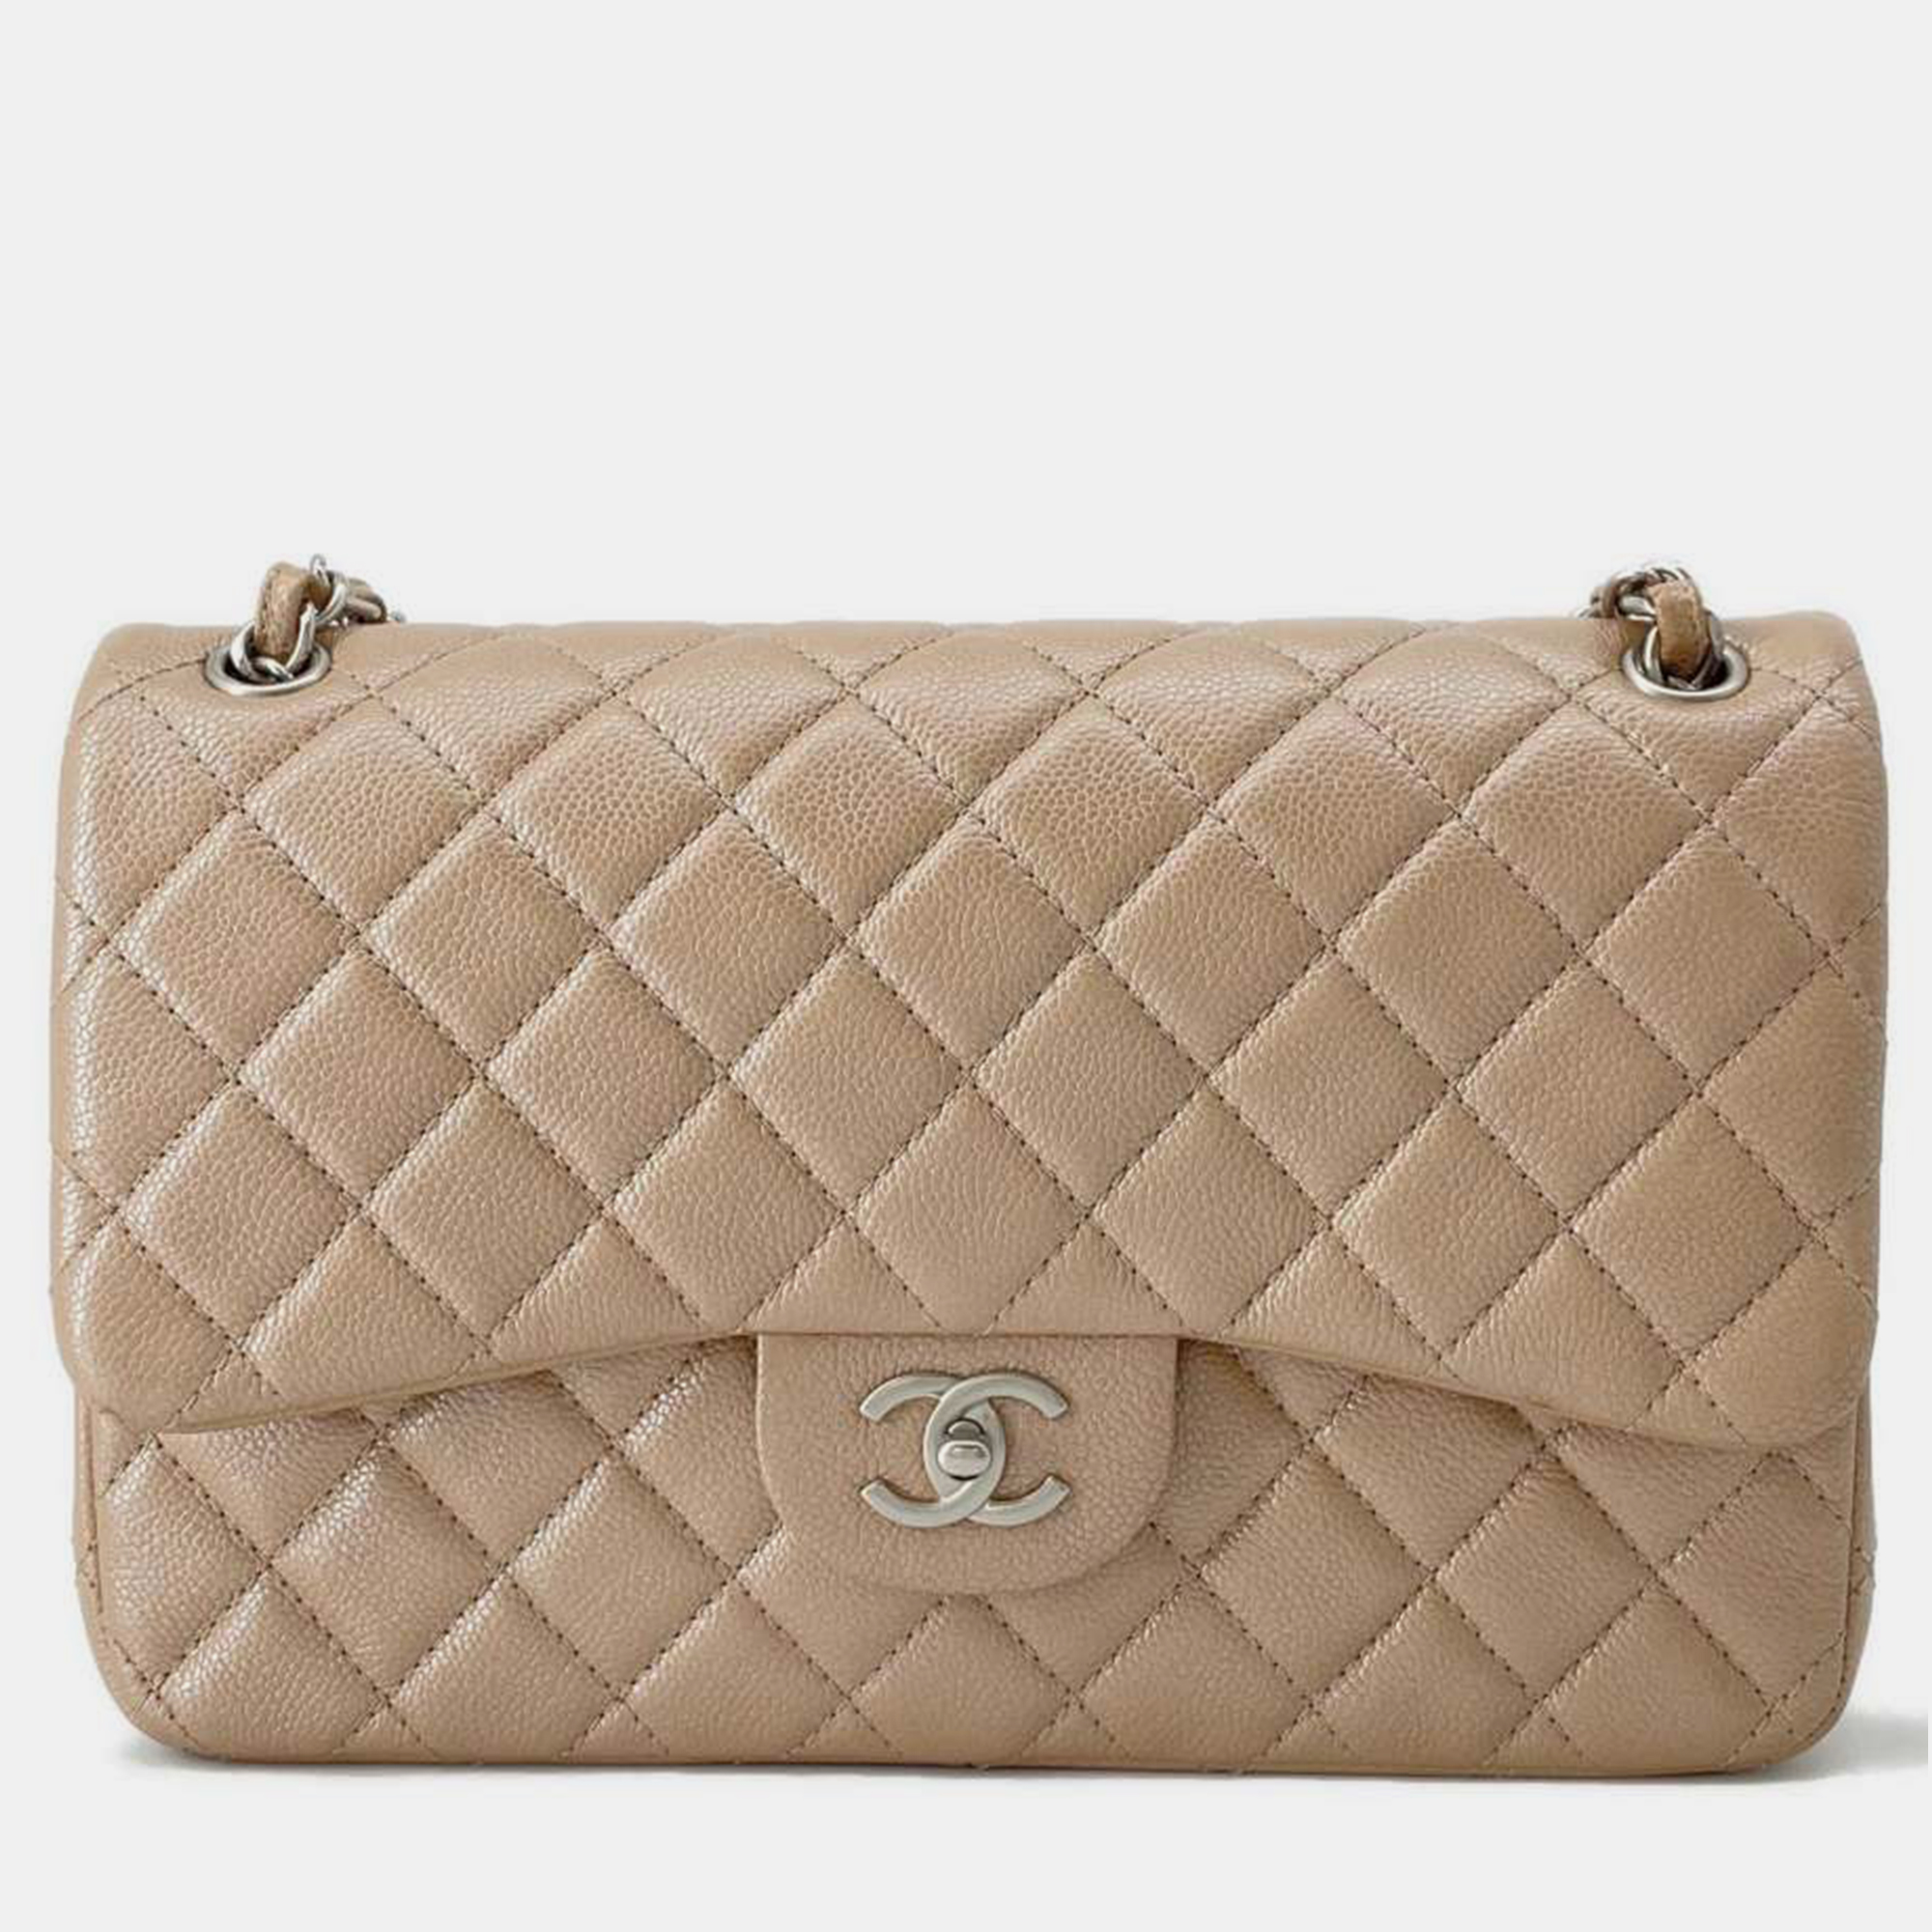 Chanel beige leather classic double flap shoulder bag